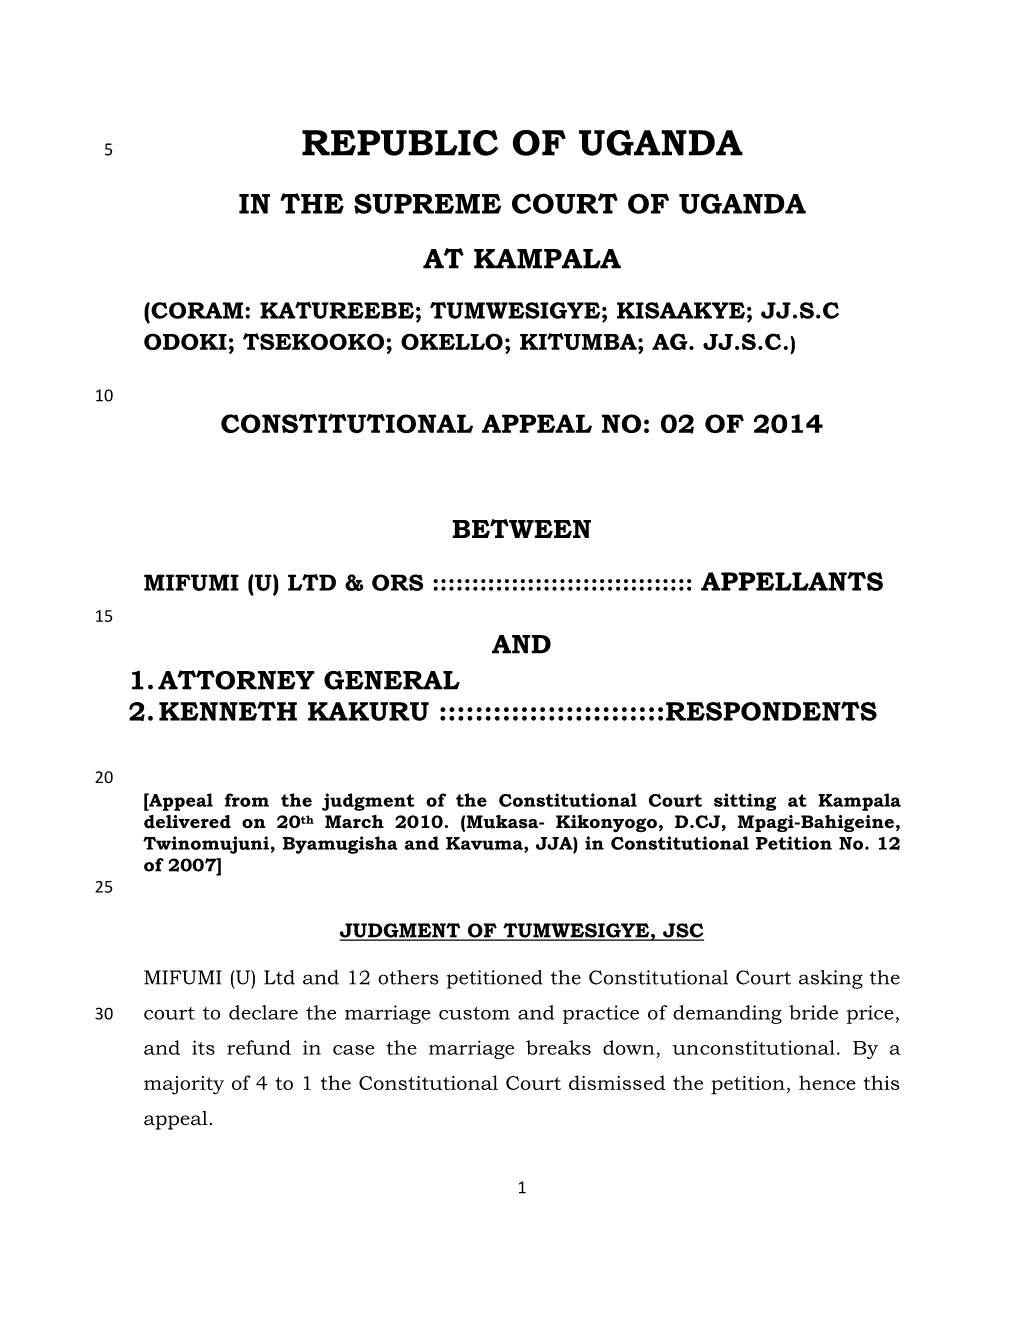 Republic of Uganda in the Supreme Court of Uganda at Kampala